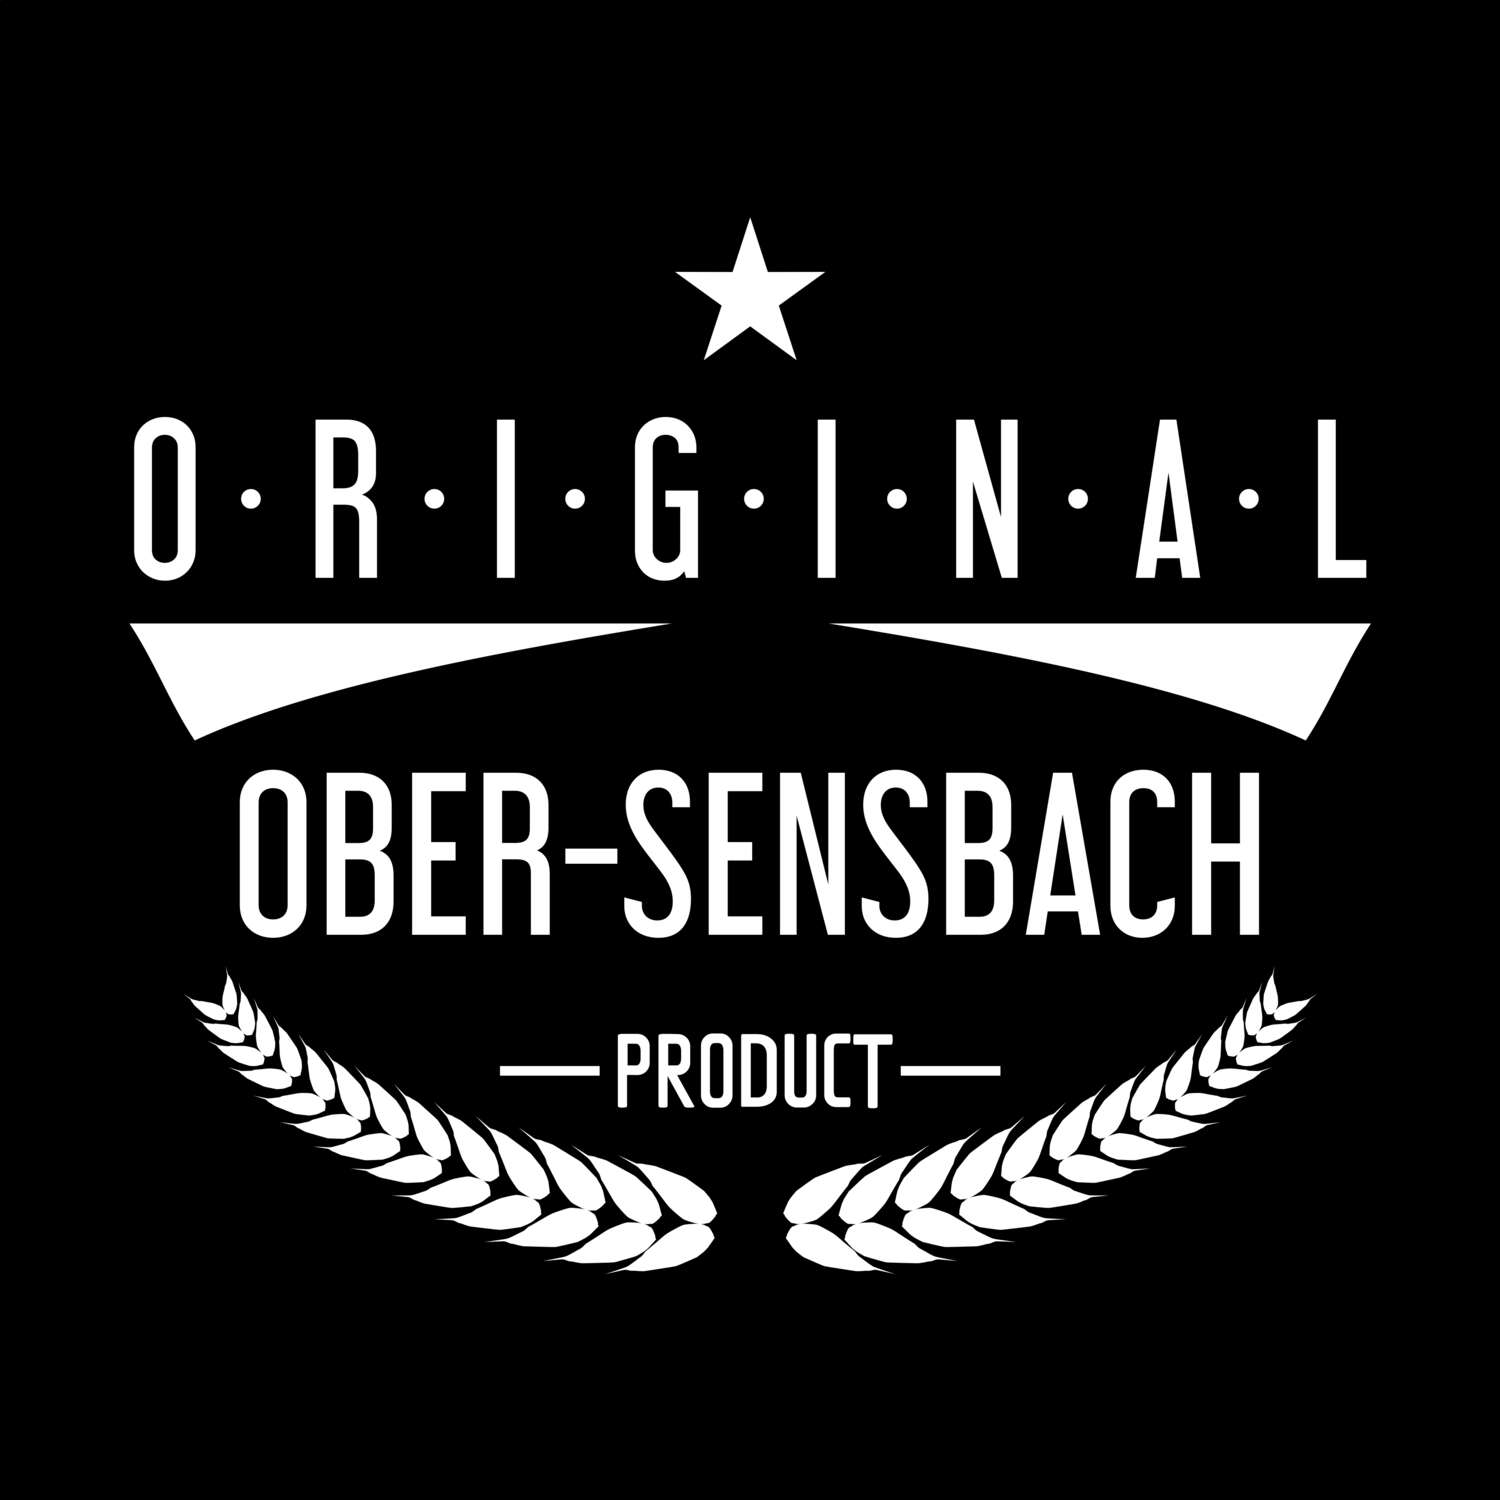 Ober-Sensbach T-Shirt »Original Product«